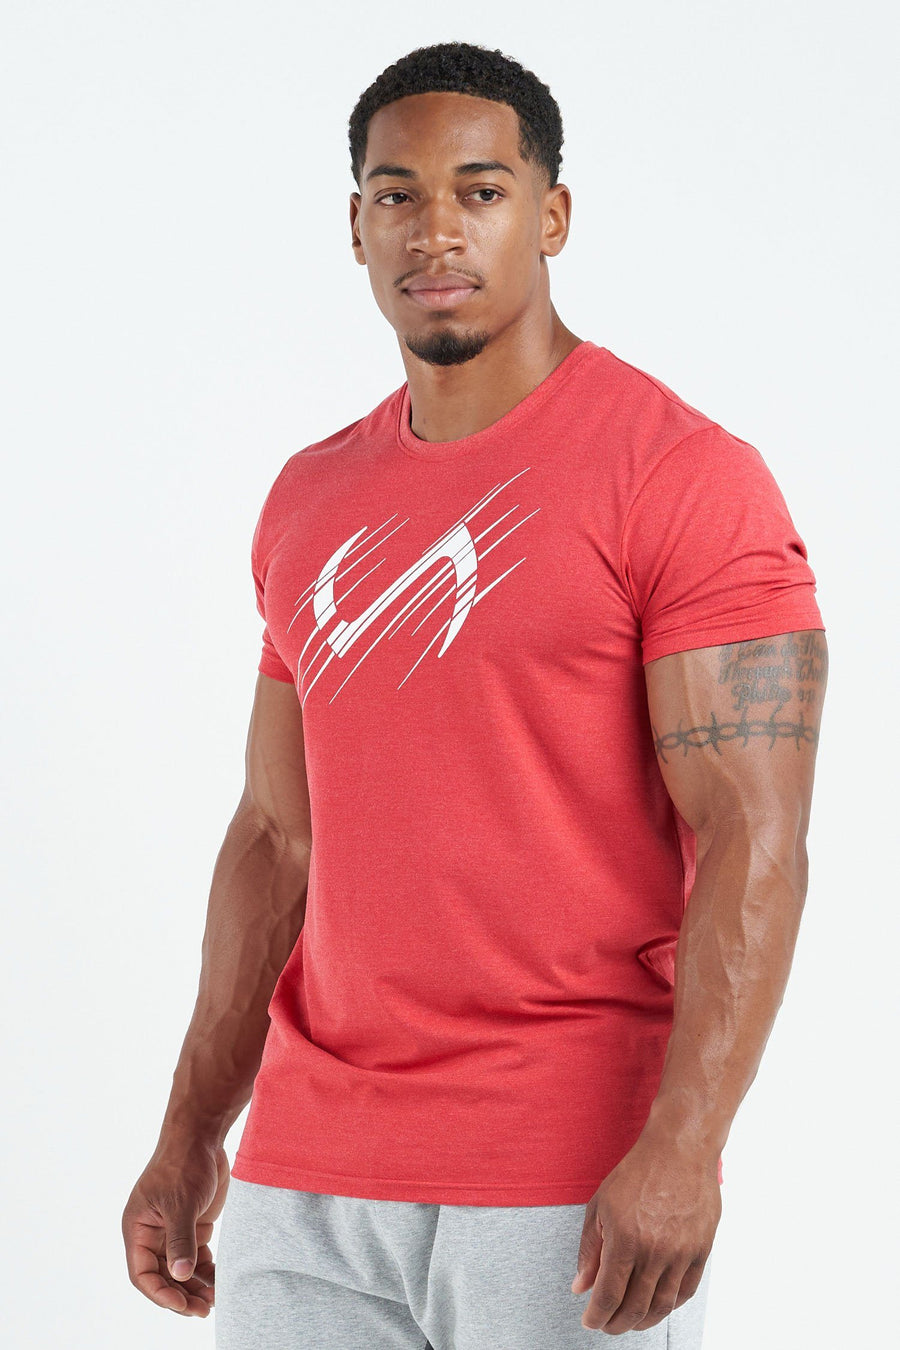 TLF Lift Gym T-Shirt - Gym T Shirts For Men - Red 4